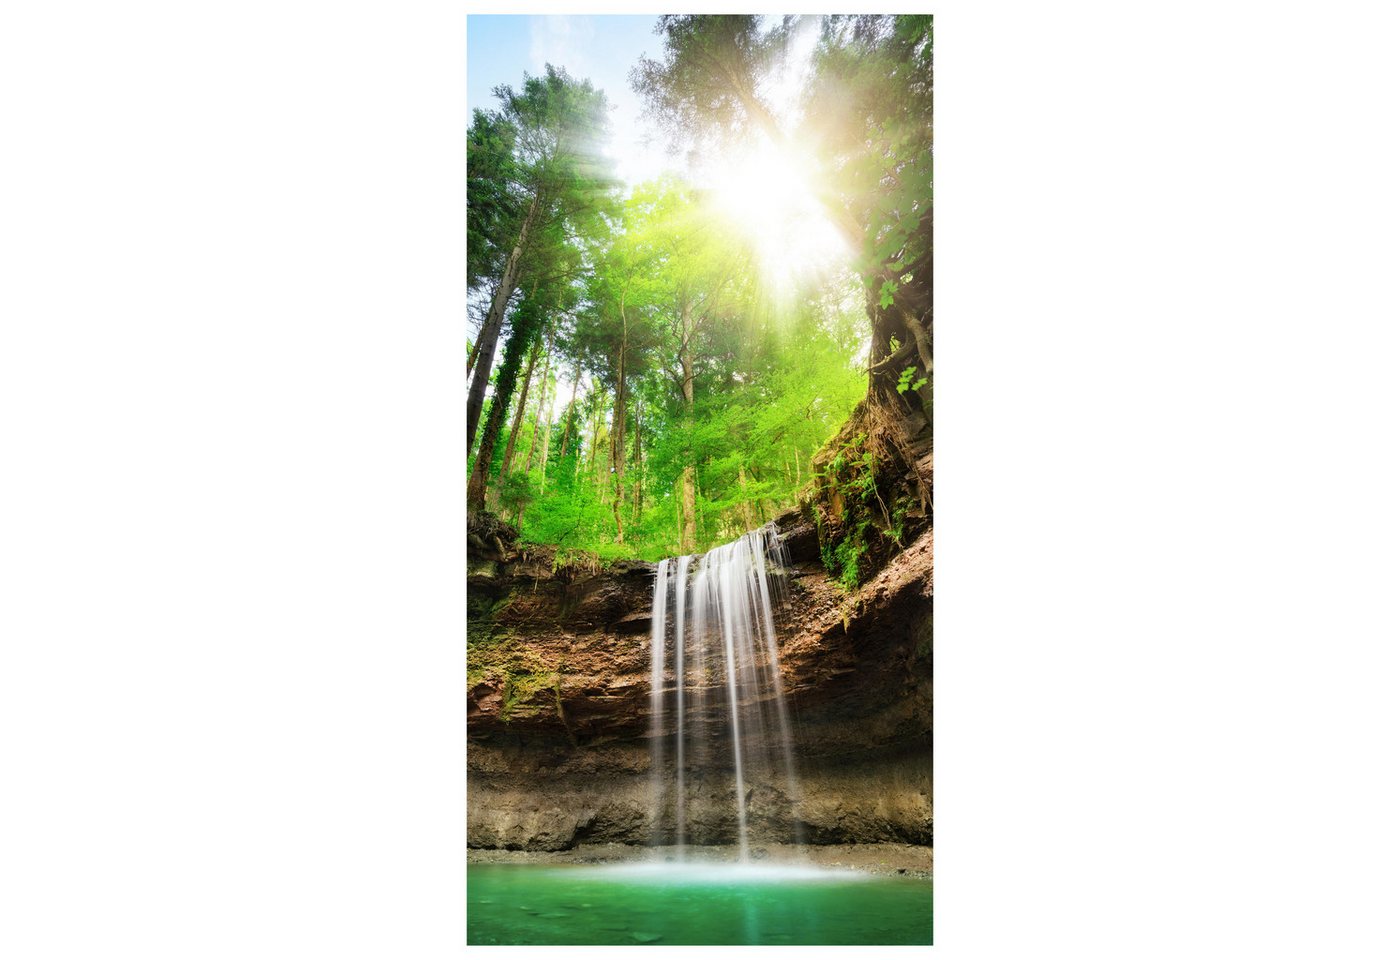 wandmotiv24 Türtapete Wasserfall im Wald, Sonne, Wasser, Natur, glatt, Fototapete, Wandtapete, Motivtapete, matt, selbstklebende Vliestapete von wandmotiv24